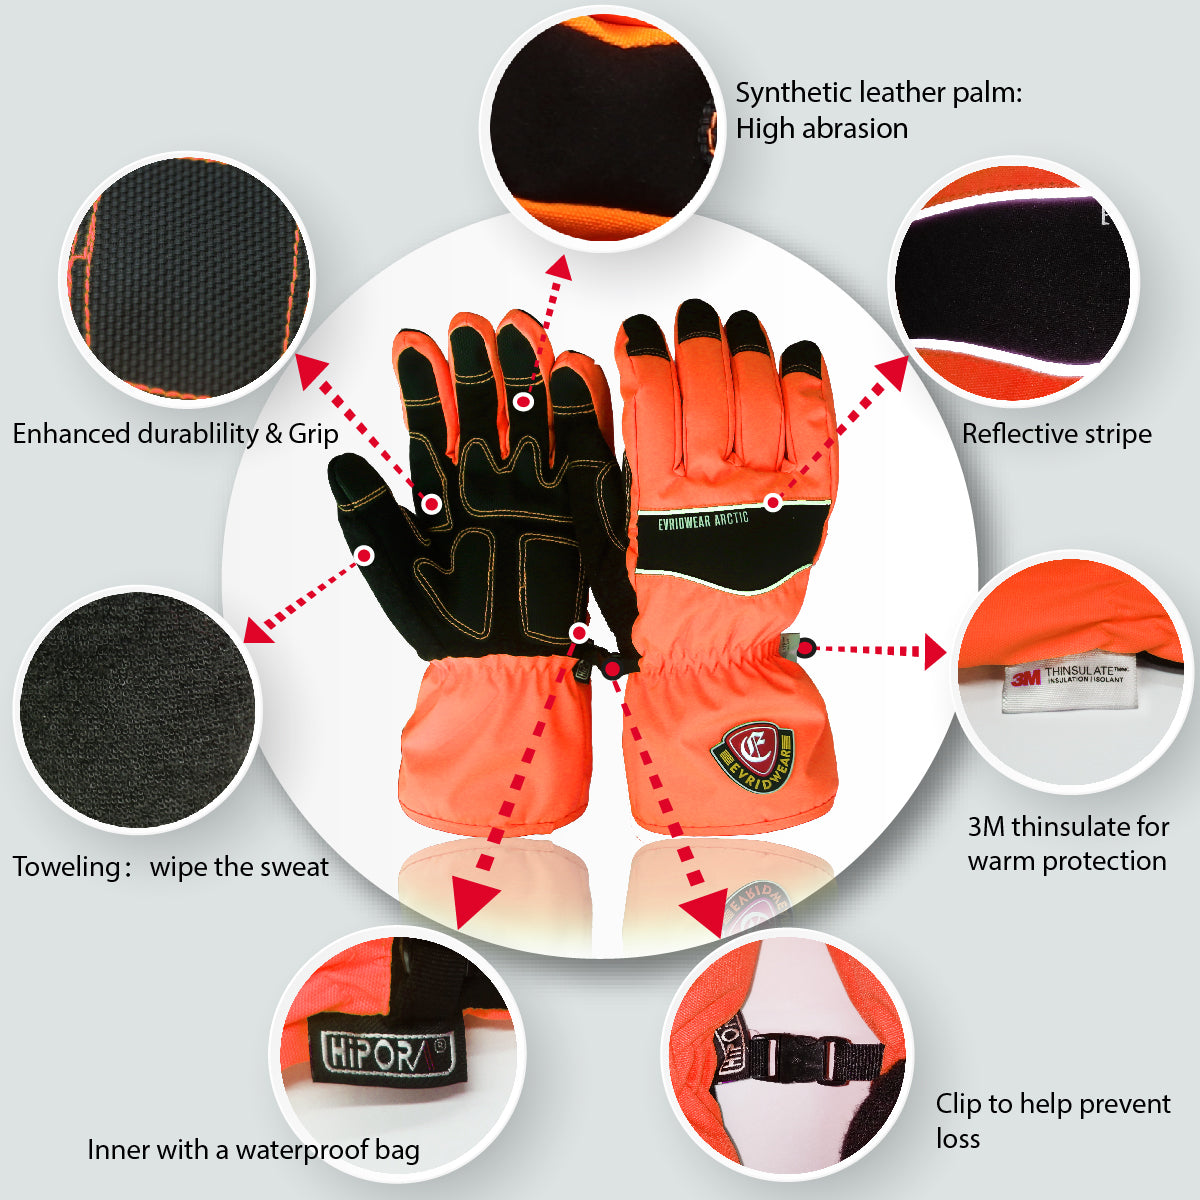 Evridwear Ski & Snowboard Winter Warm Gloves Waterproof for Cold Weather and Outdoor Sport (Orange)-EvridWearUS